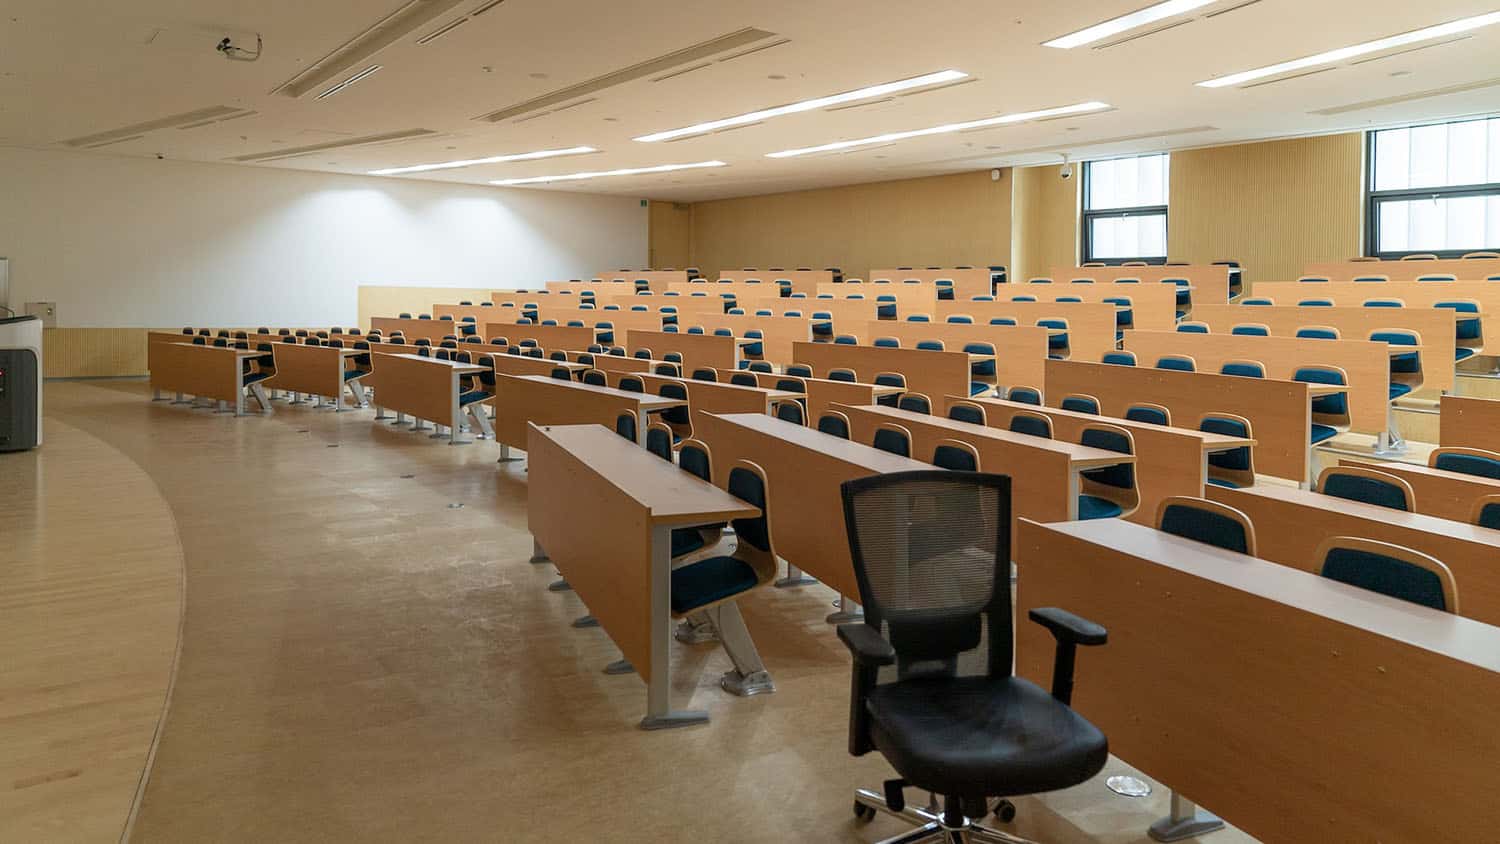 Image shows an empty university classroom.